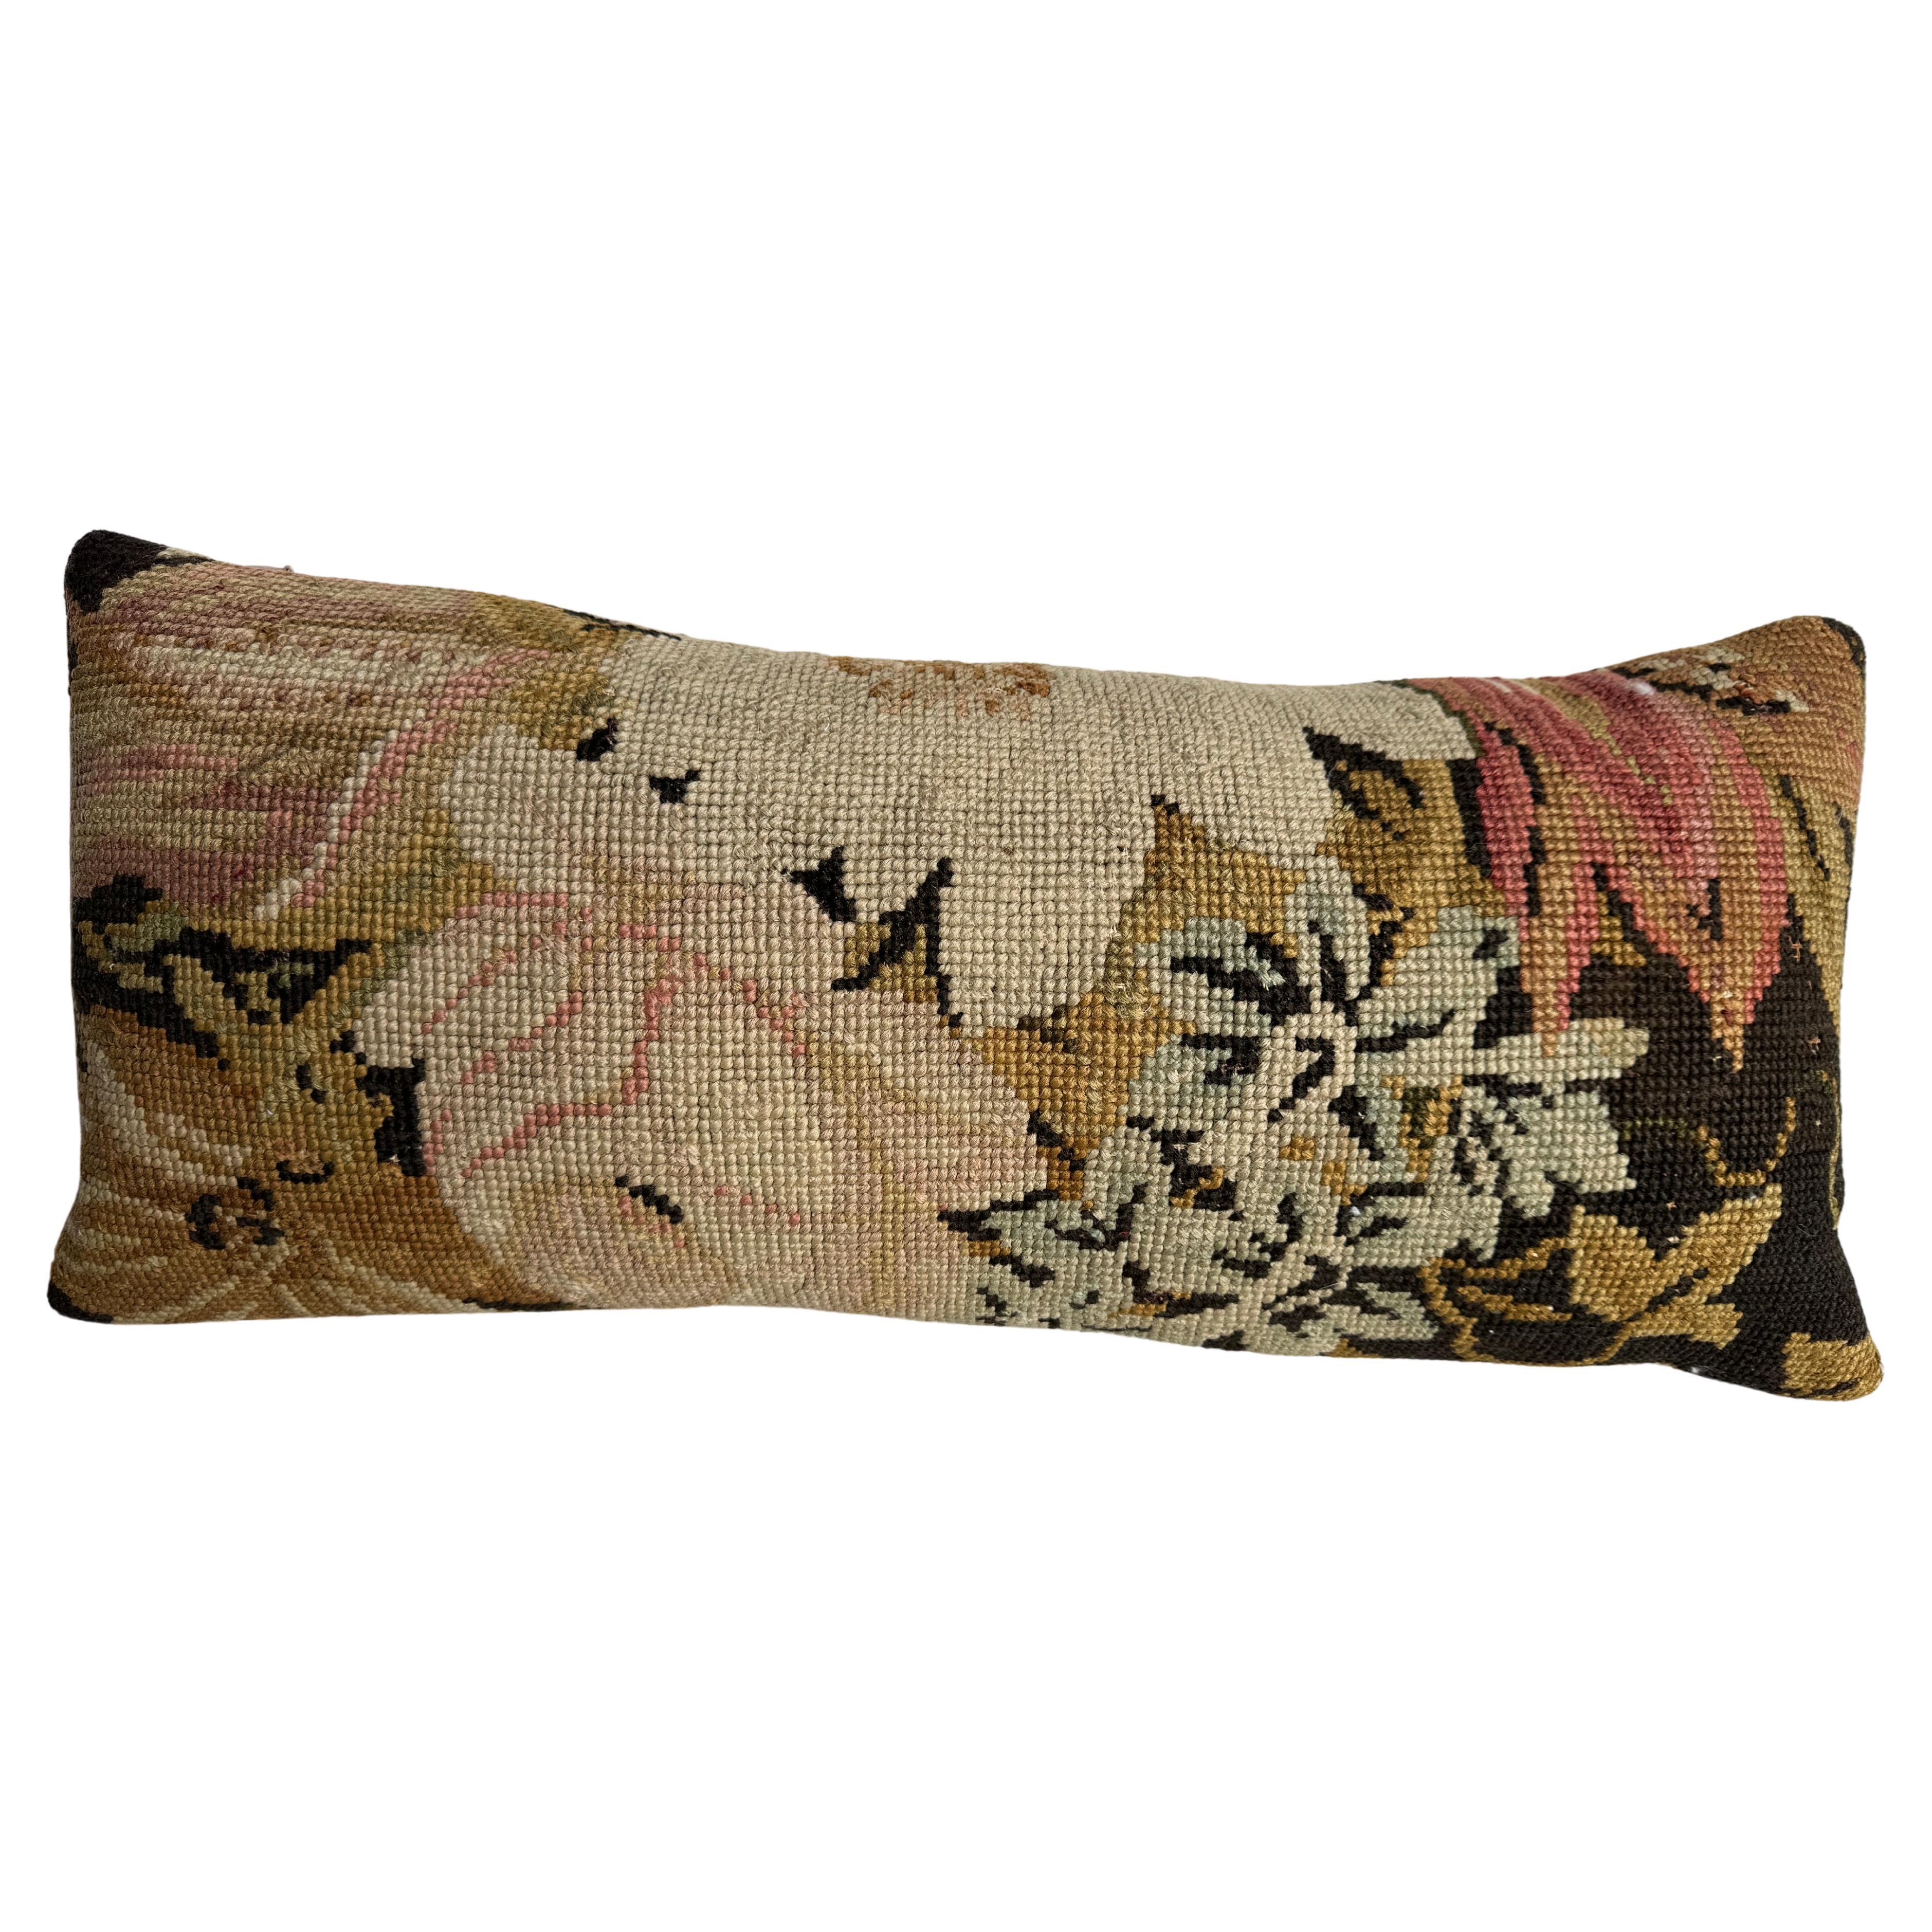 English Needlework Pillow 1850 - 24" x 11" For Sale